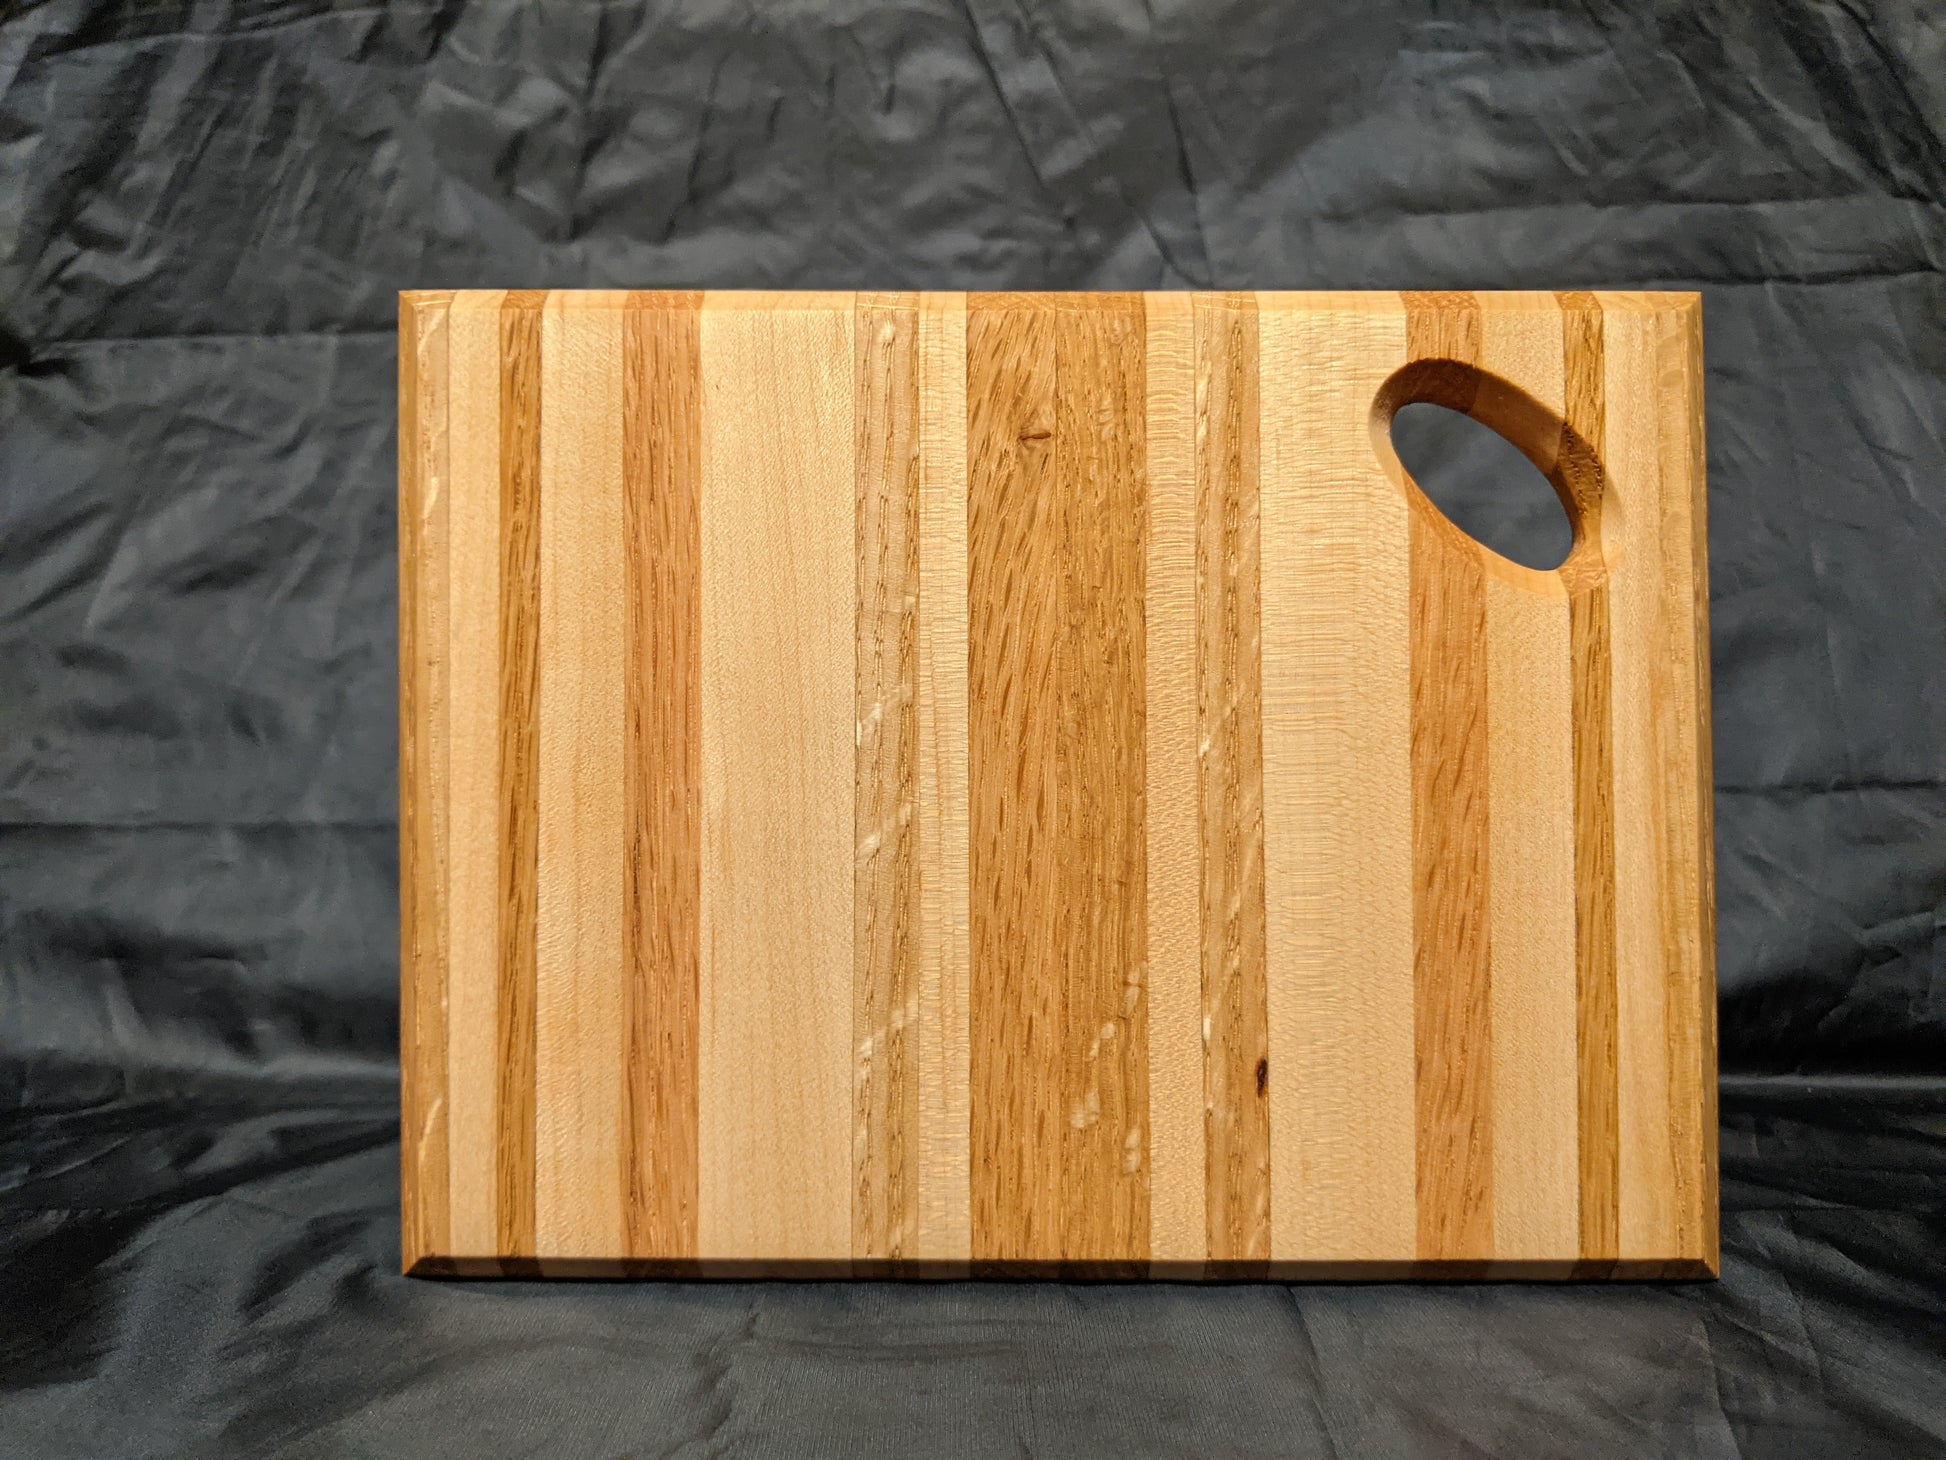 Small Handle Maple Cutting Board